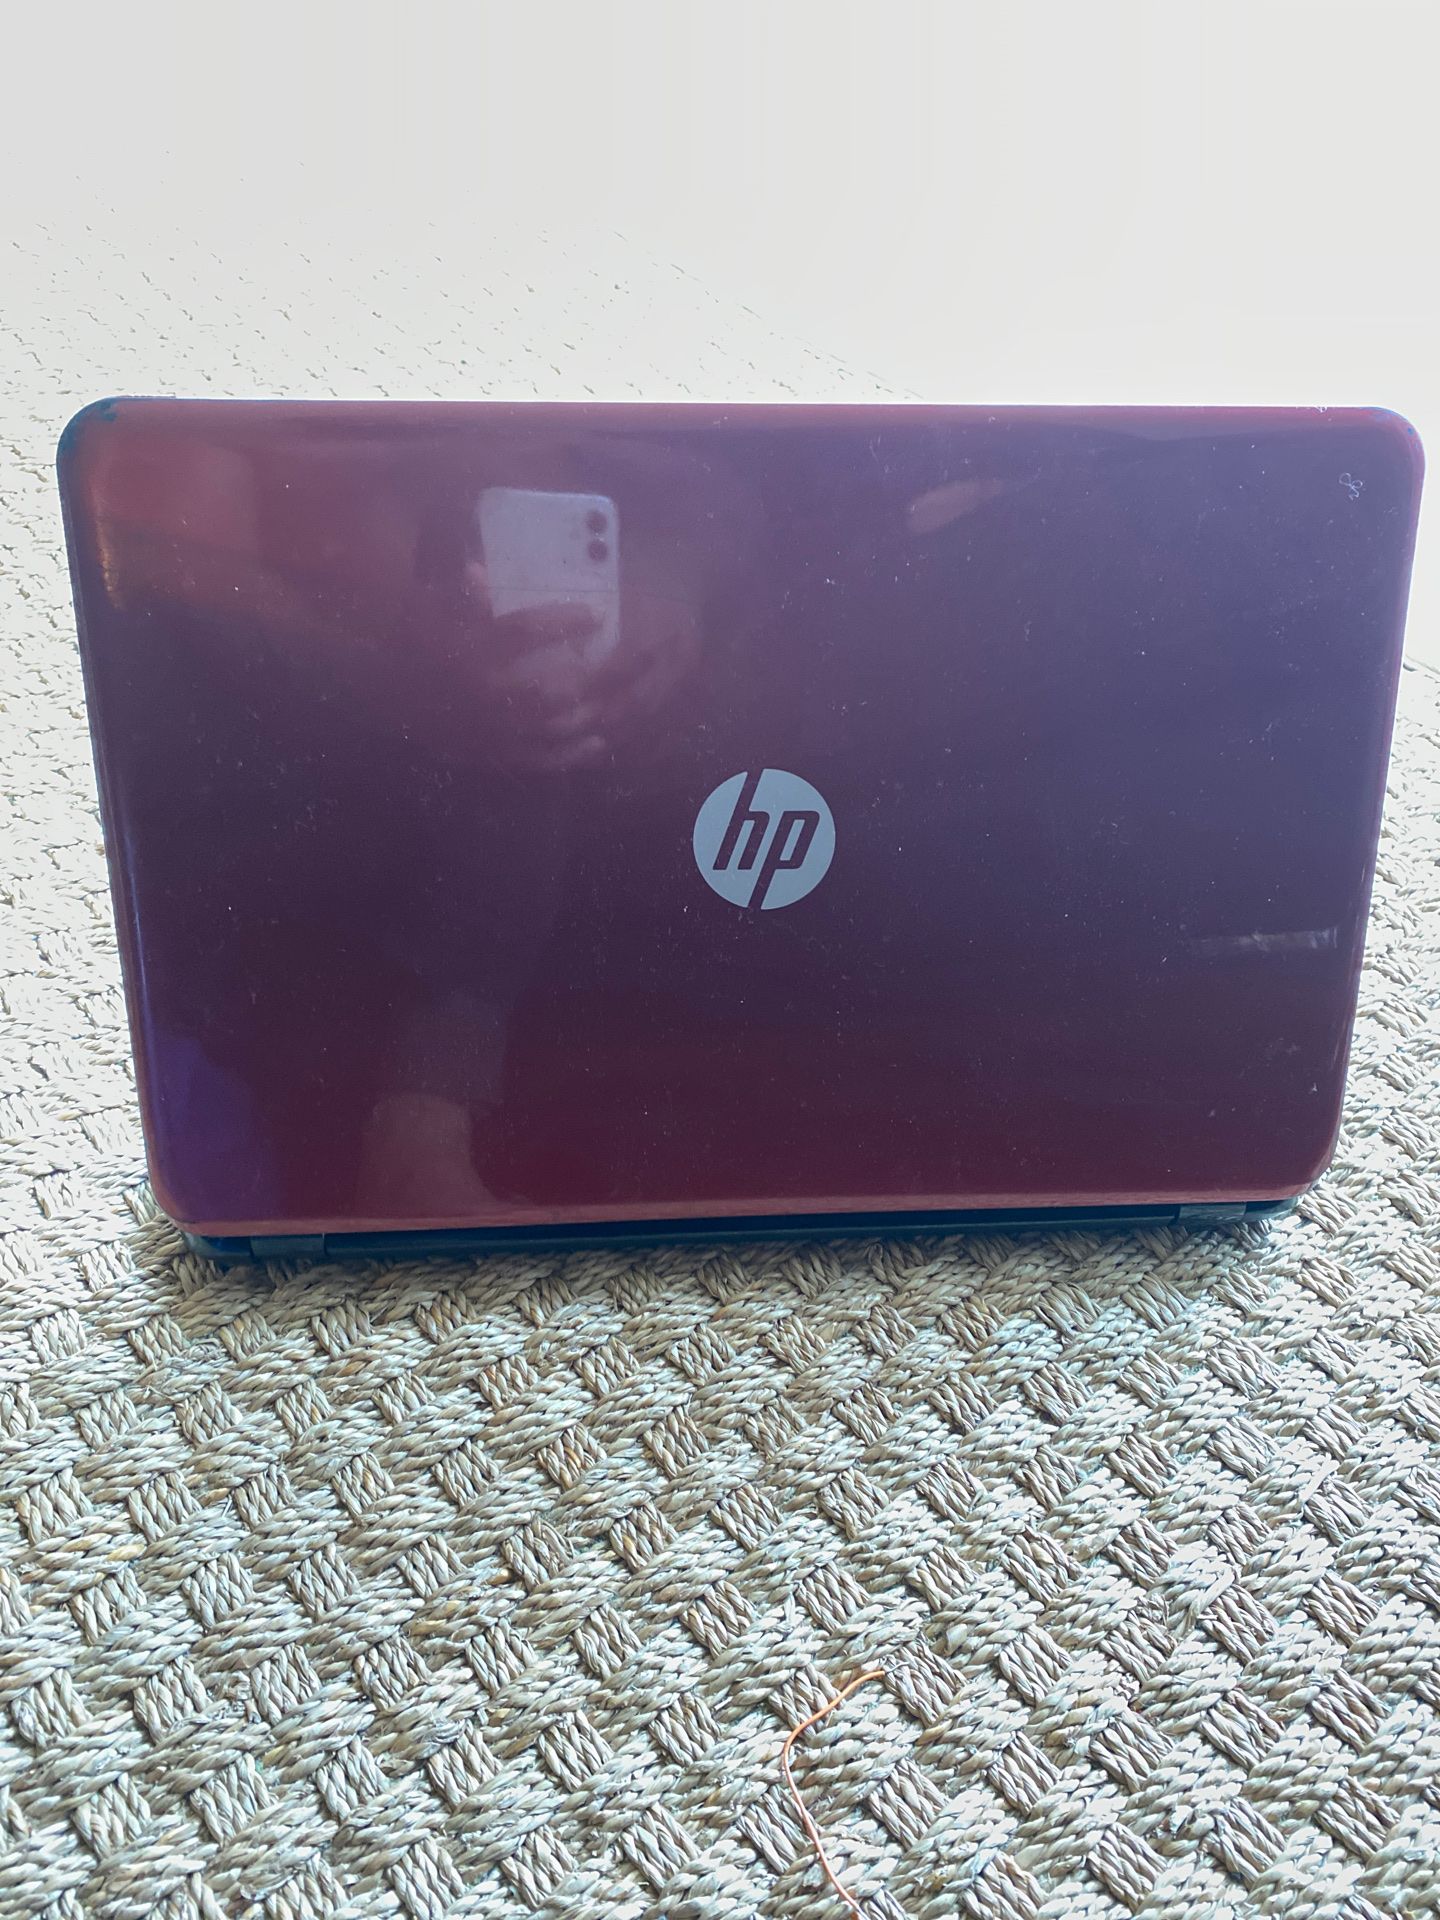 HP laptop 15 inch screen, 500 GB storage, Intel Pentium processor